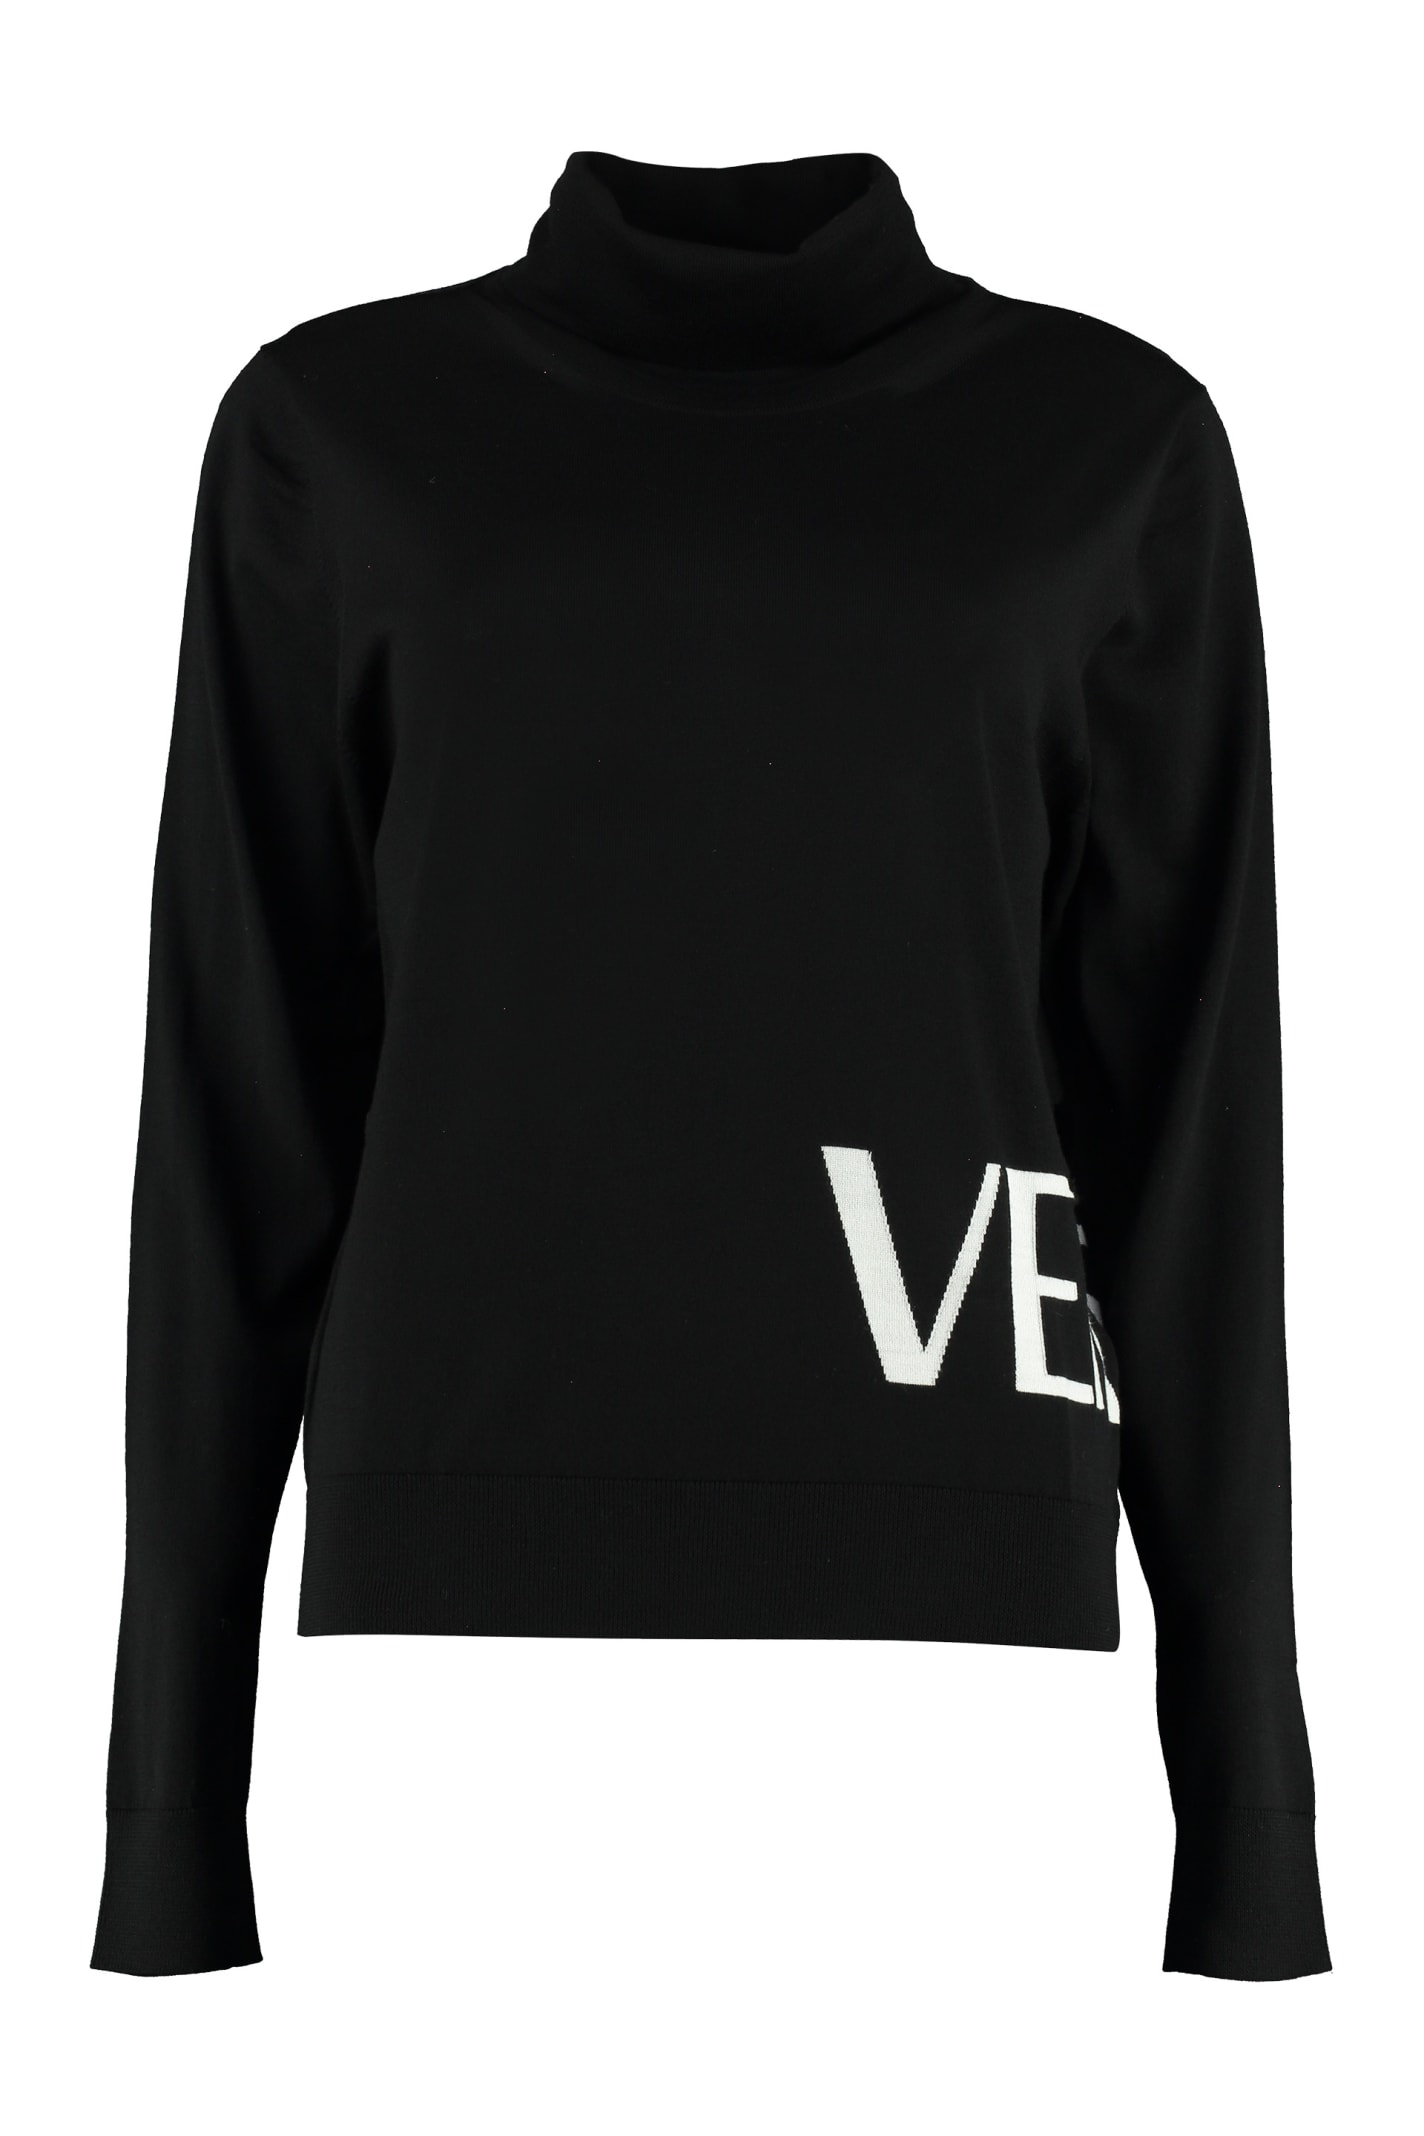 Versace Wool Turtleneck Sweater